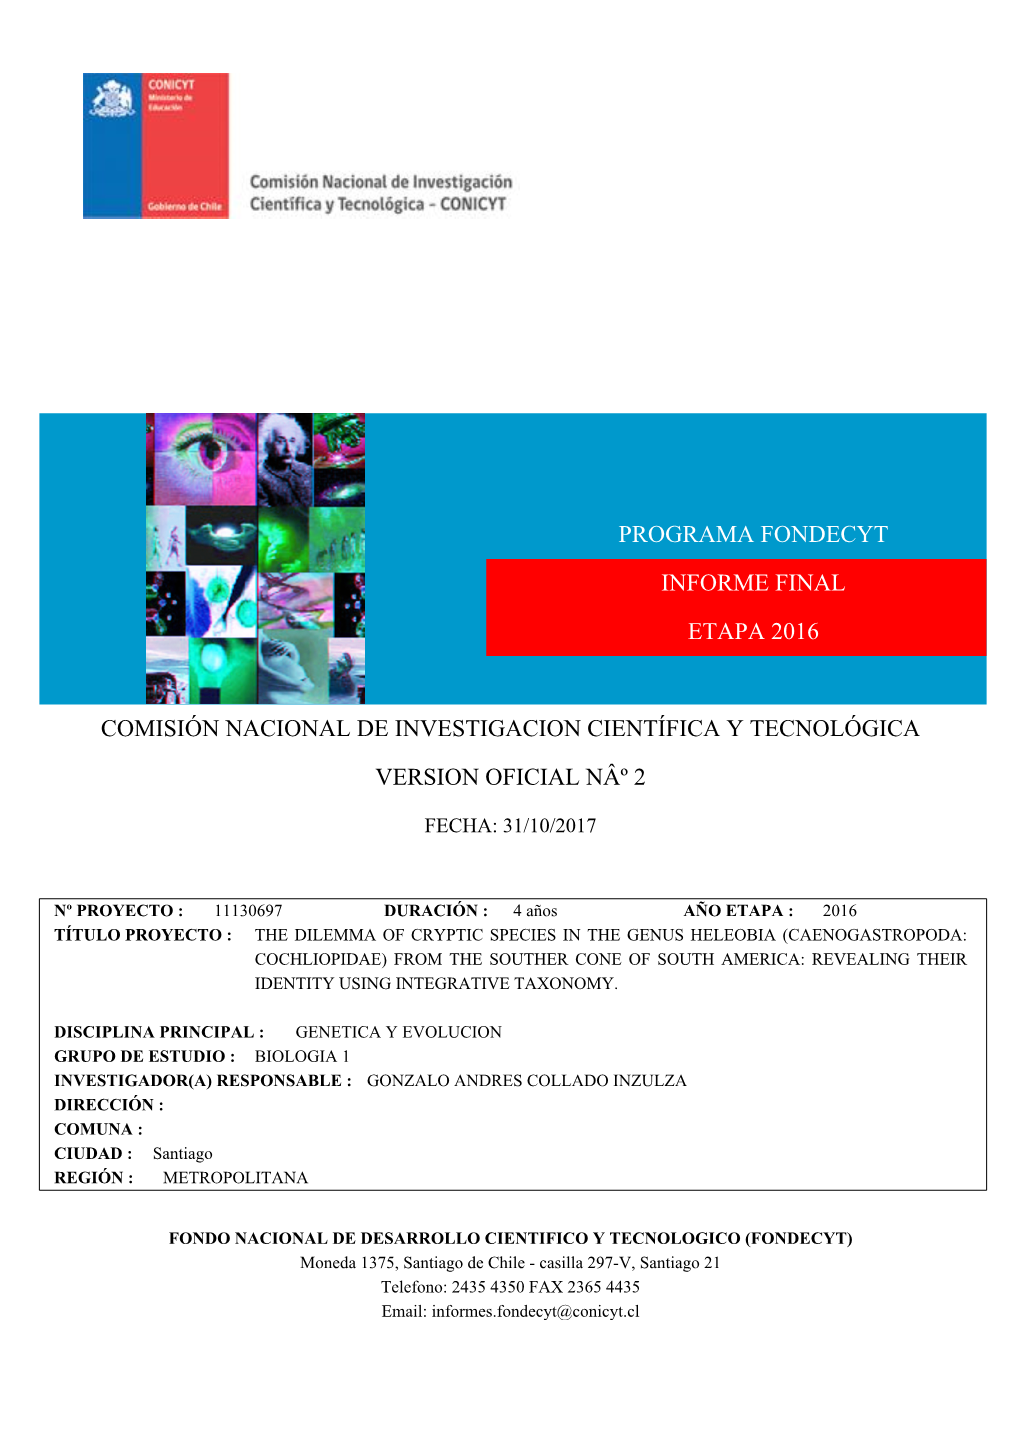 Programa Fondecyt Informe Final Etapa 2016 Comisión